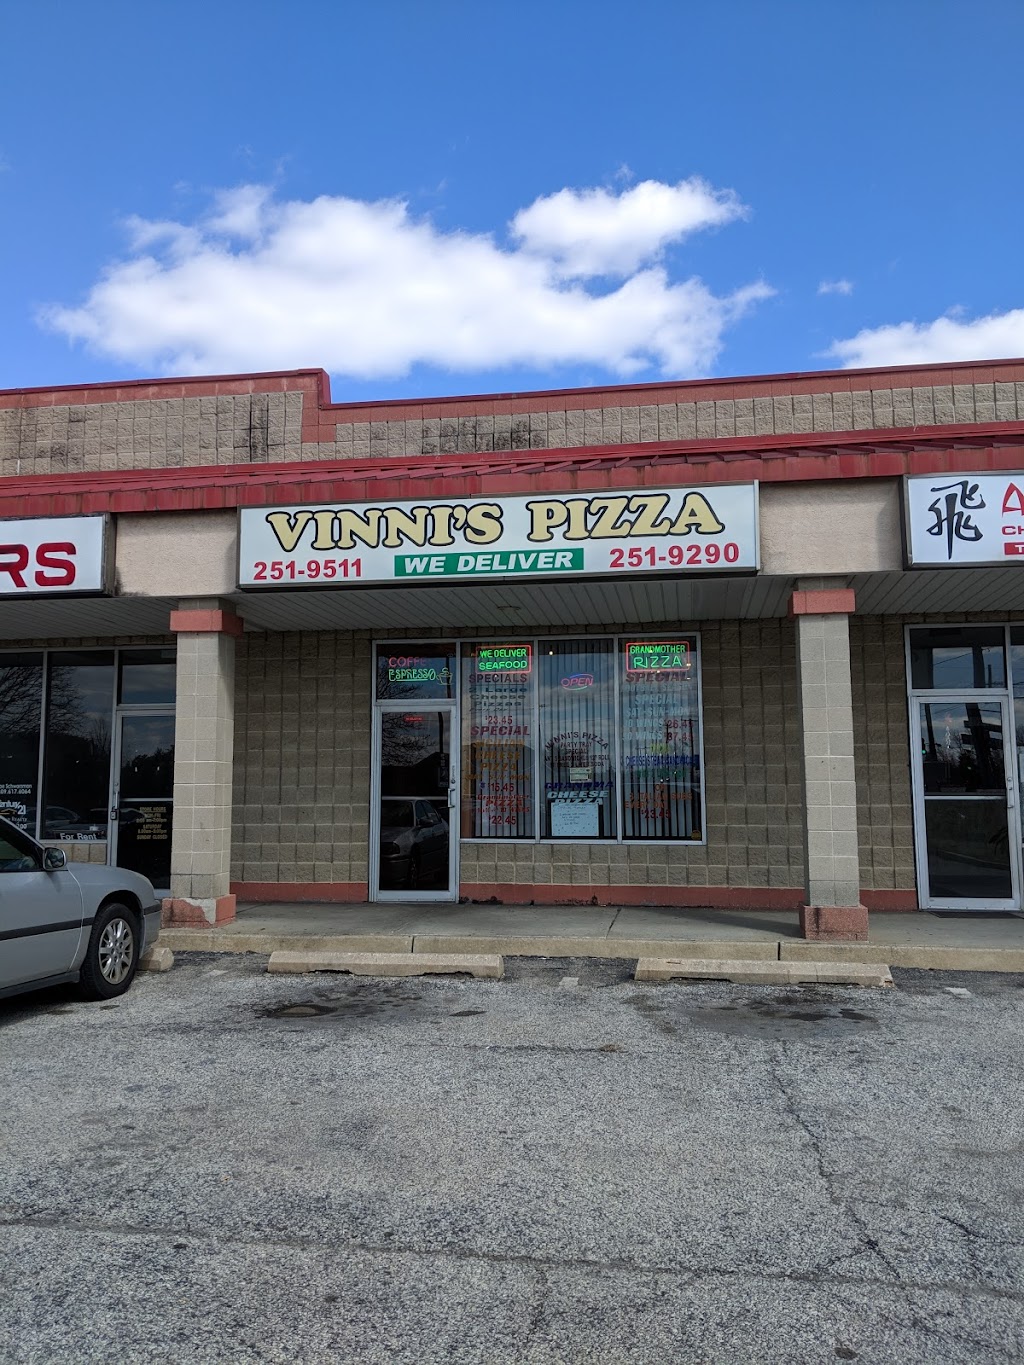 Vinnis Pizza | 3 E Lecato Ave, West Deptford, NJ 08086 | Phone: (856) 251-9511